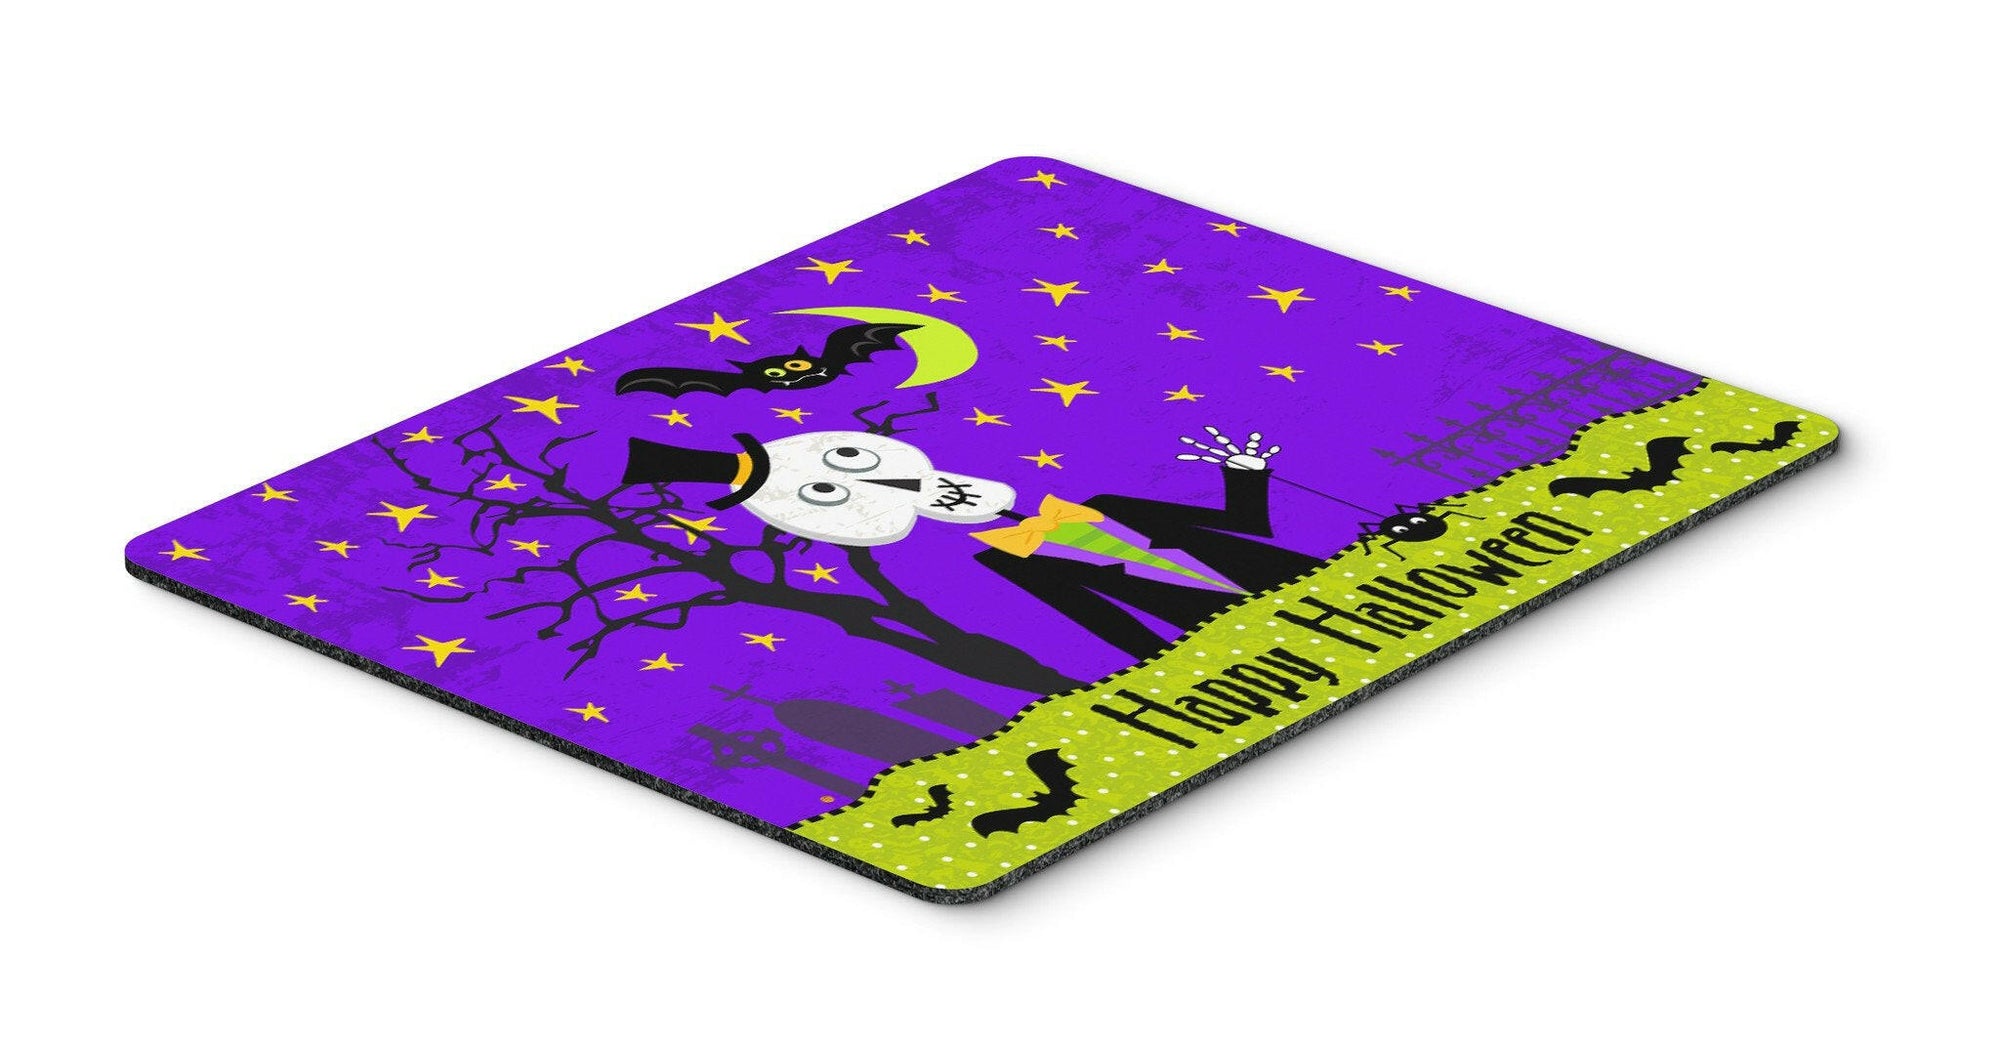 Happy Halloween Skeleton Mouse Pad, Hot Pad or Trivet VHA3014MP by Caroline's Treasures